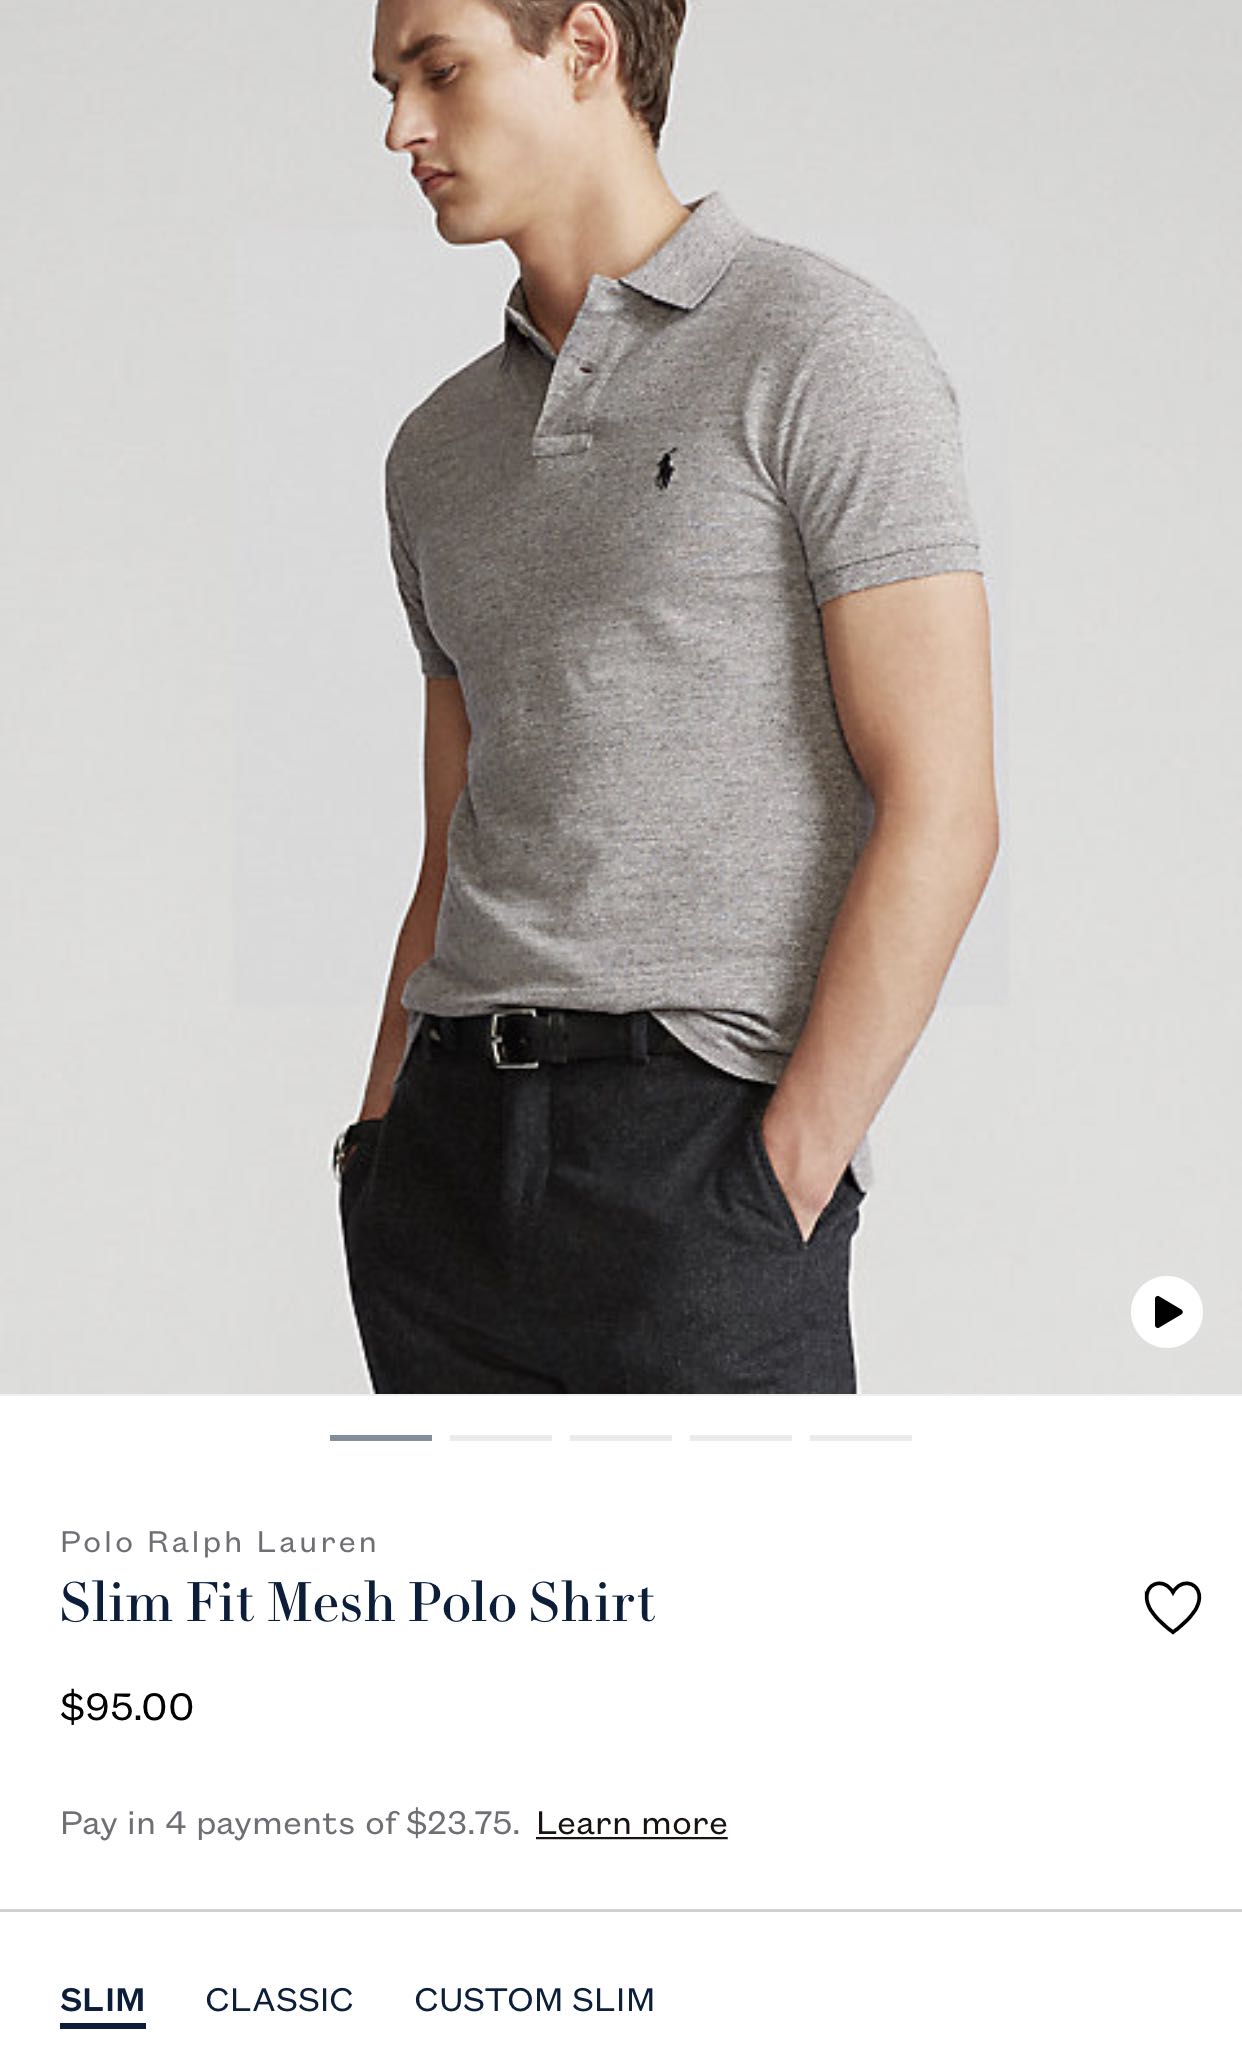 Polo Ralph Lauren Slim-Fit Mesh Polo Shirt